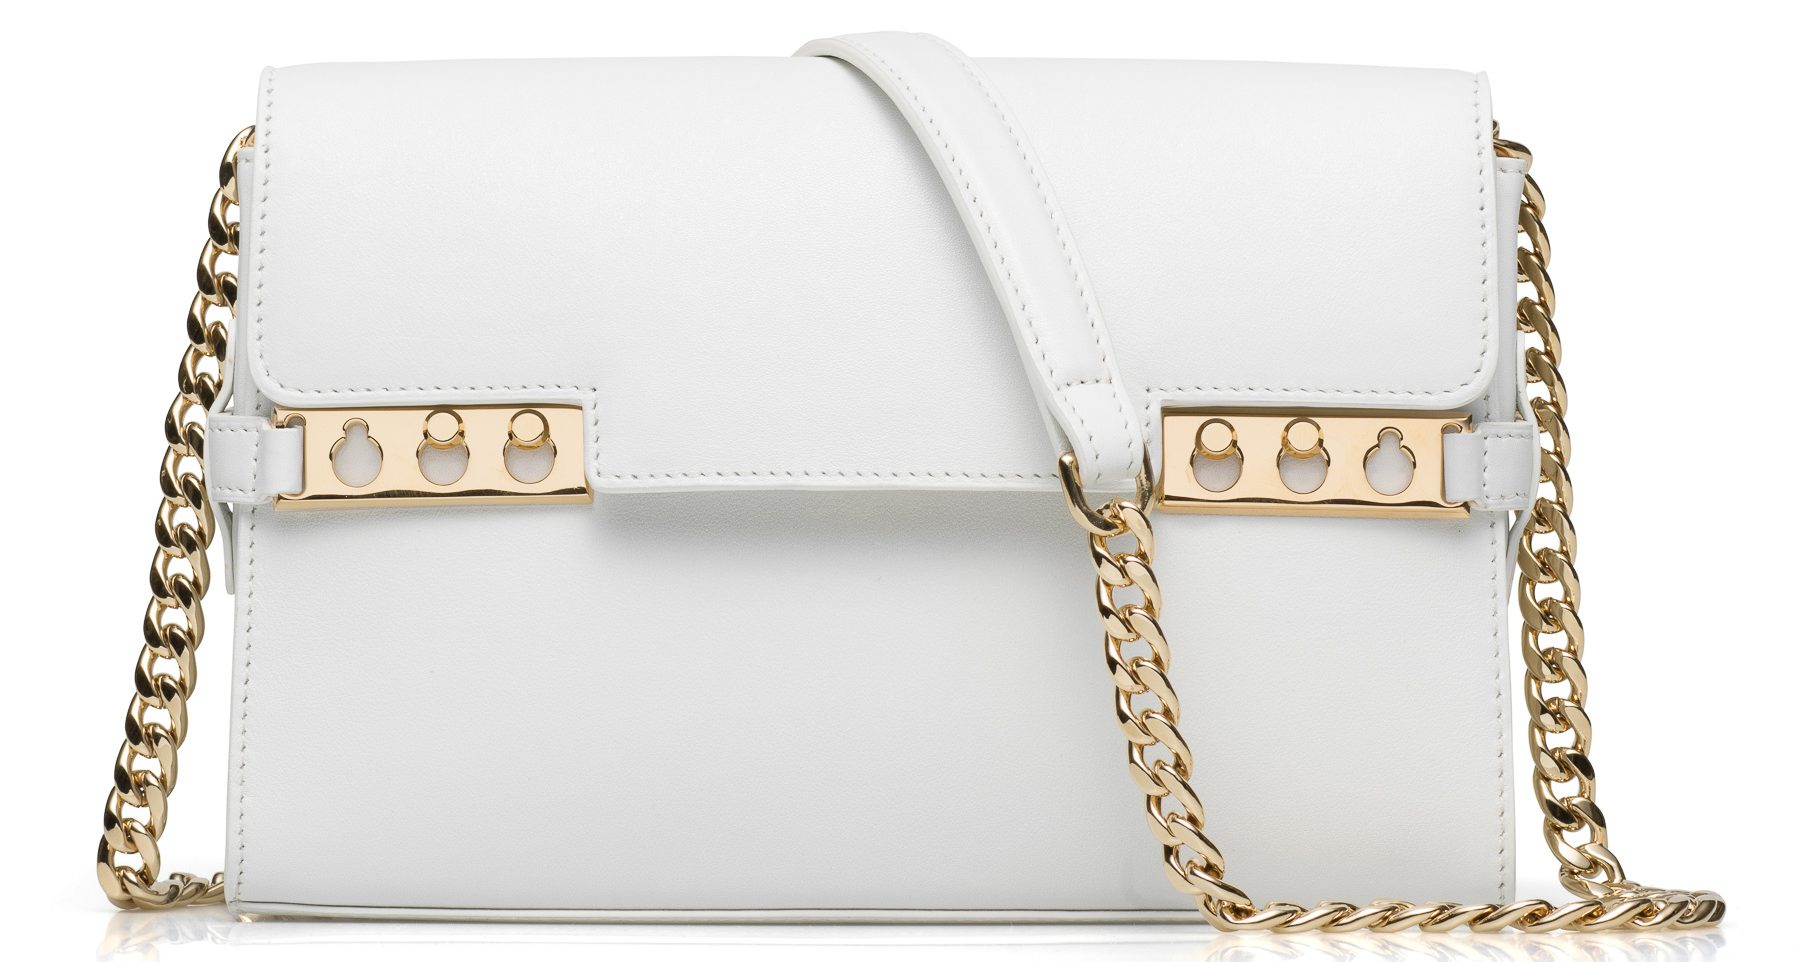 Delvaux: The Luxury Handbag for the Logo-Averse